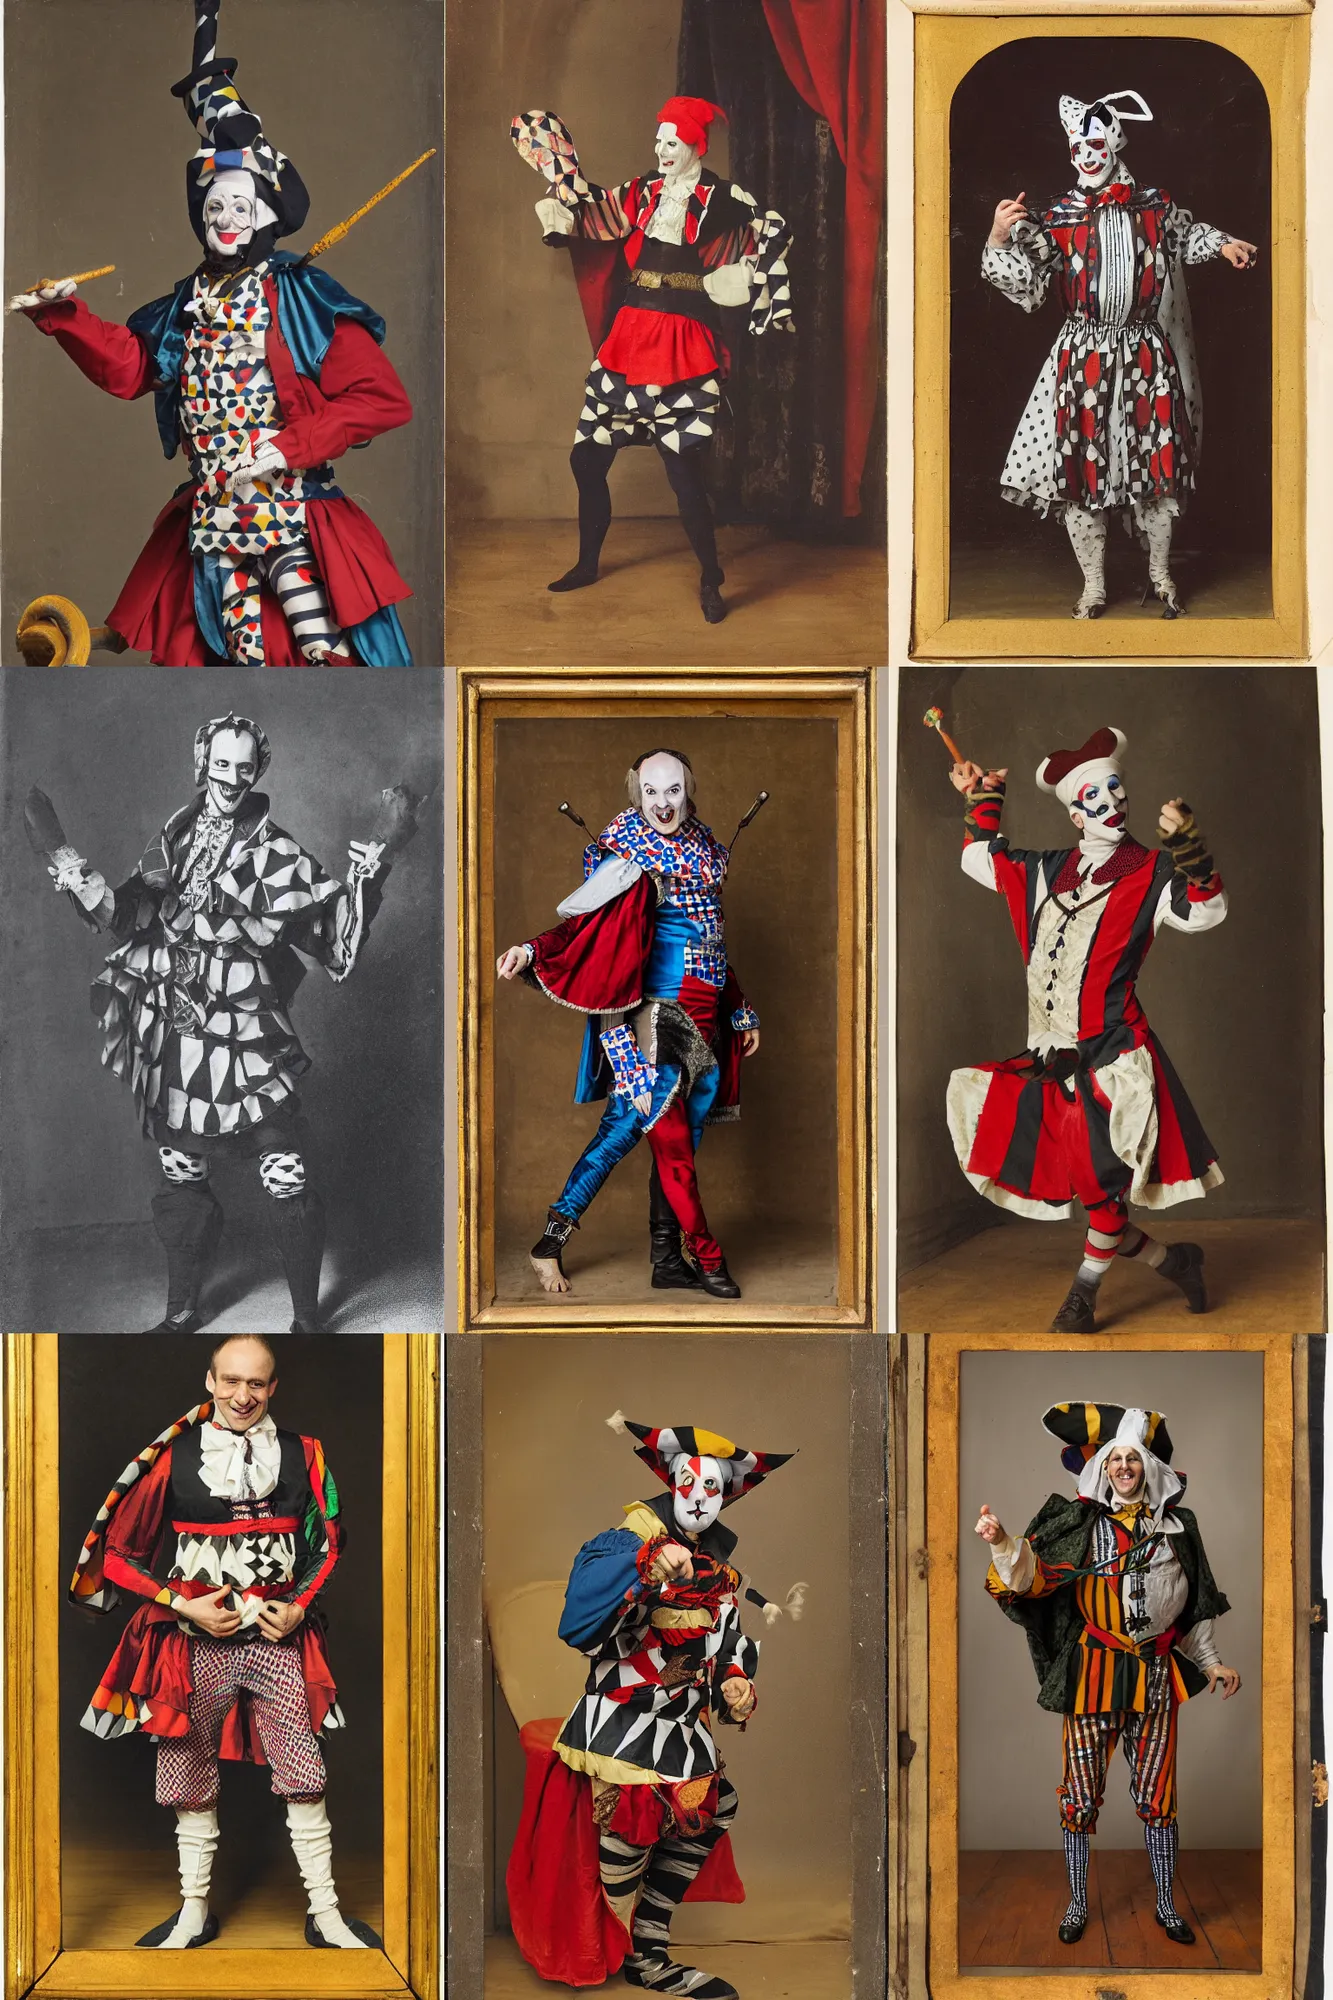 Prompt: Man dressed as medieval Harlequin jester entertains at the royal court, studio portrait